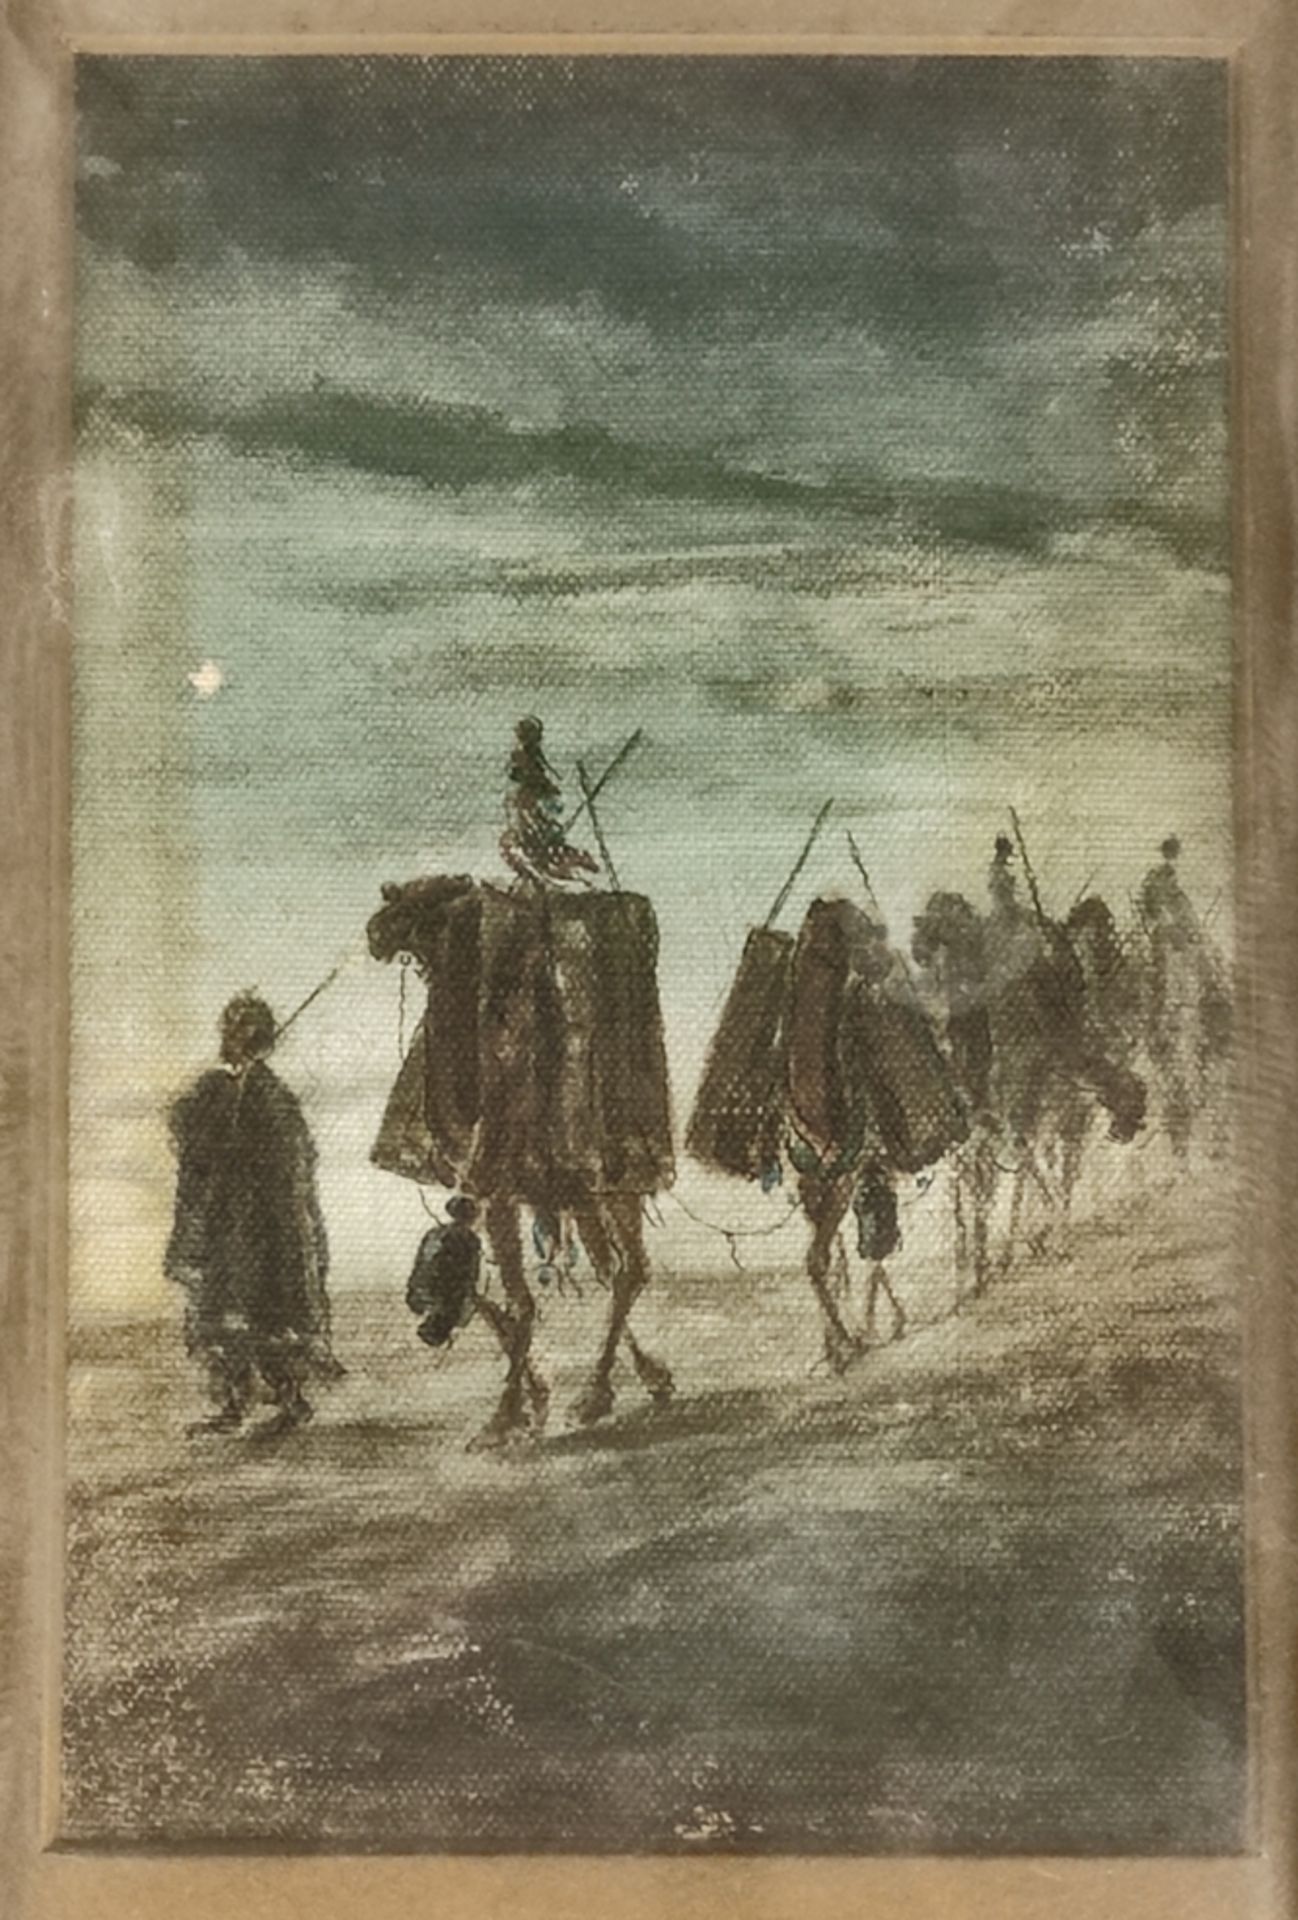 Orientalist (19th century) "Caravan by night", oil on canvas, 20x13 cm, mount, 38,5x29 cm with beau